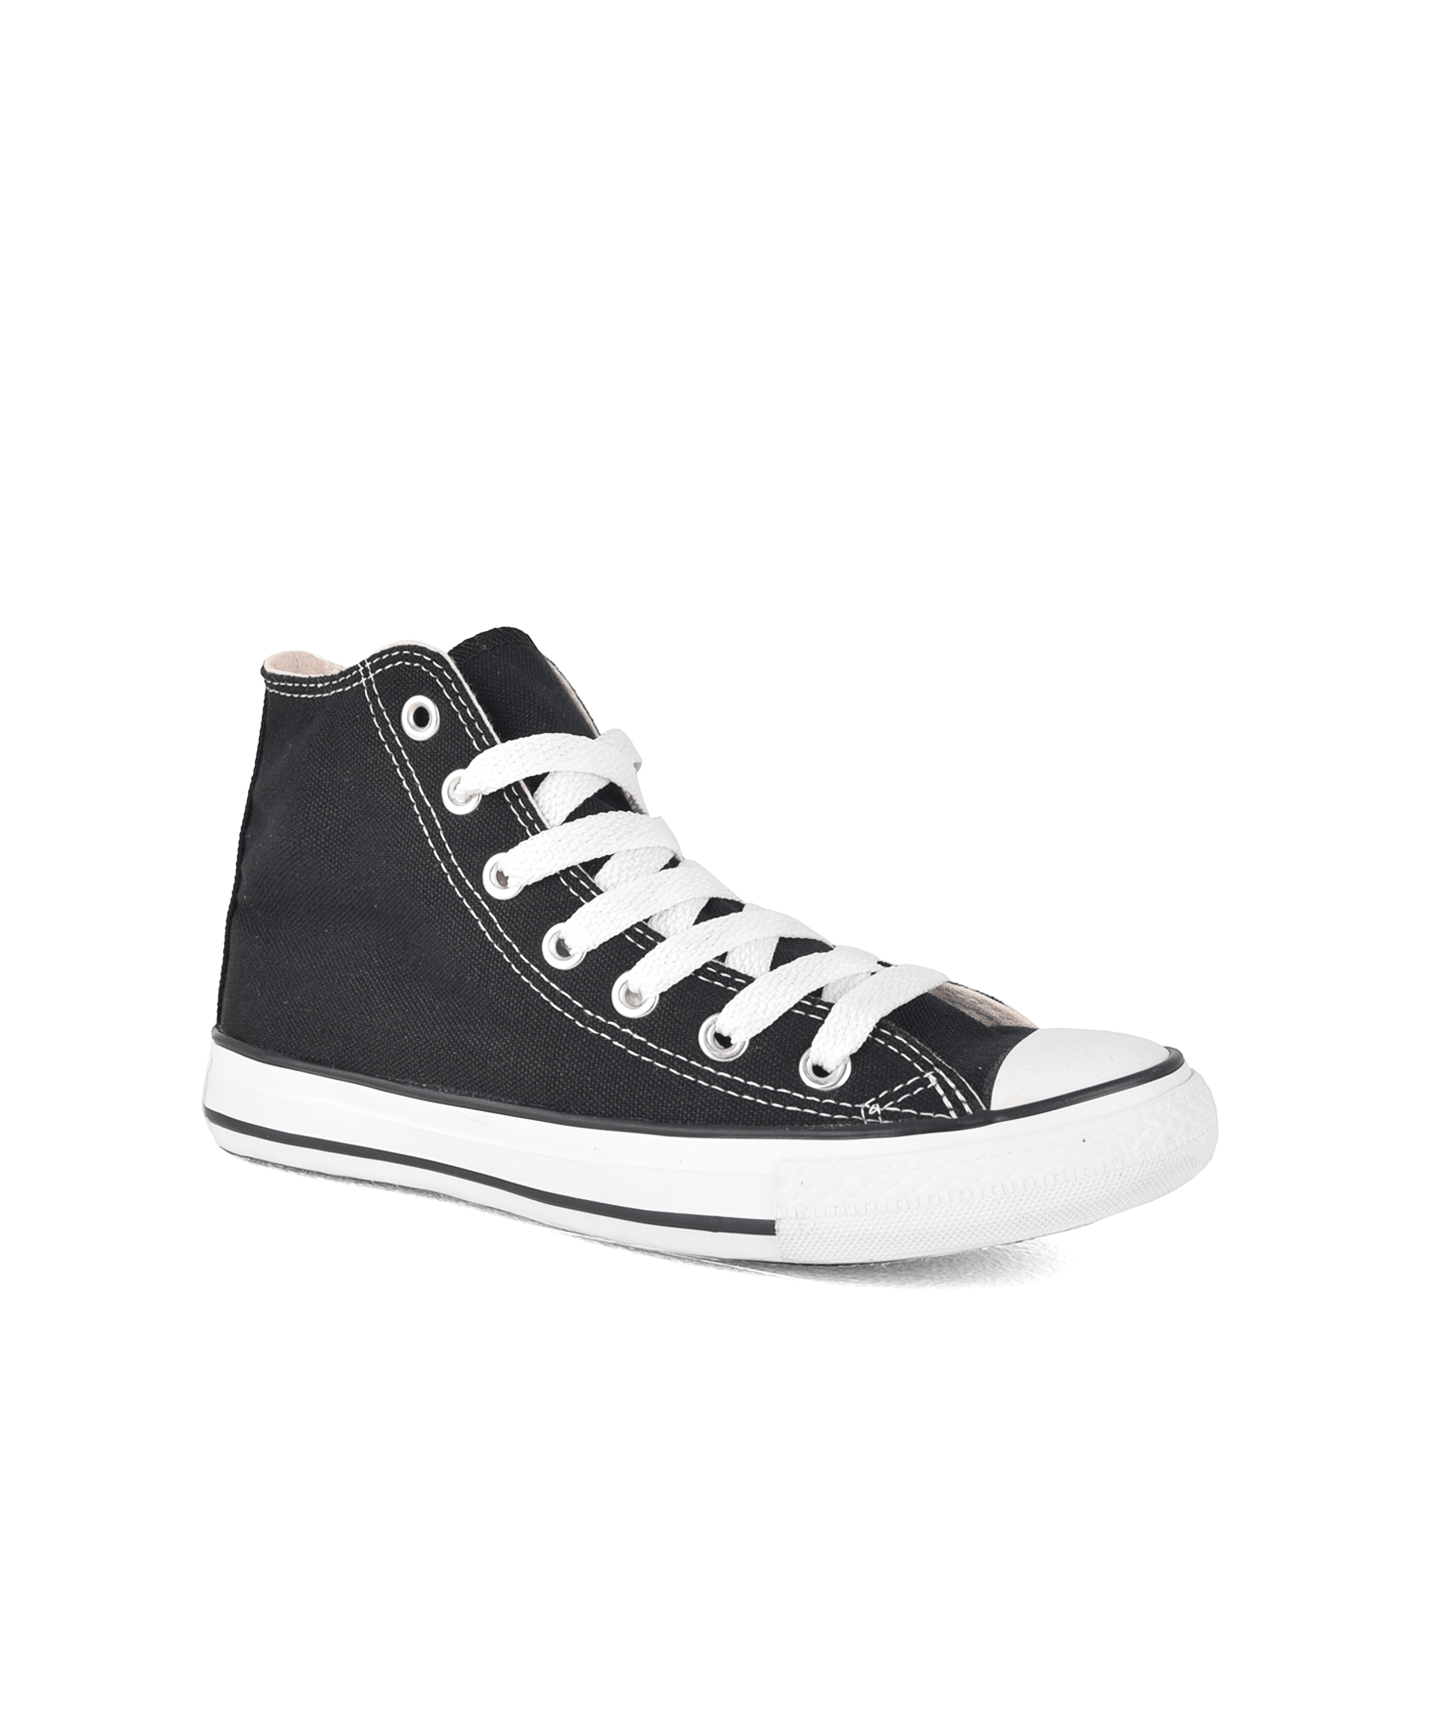 Zapato colegial niño en color negro - Croydon - Calzamundo